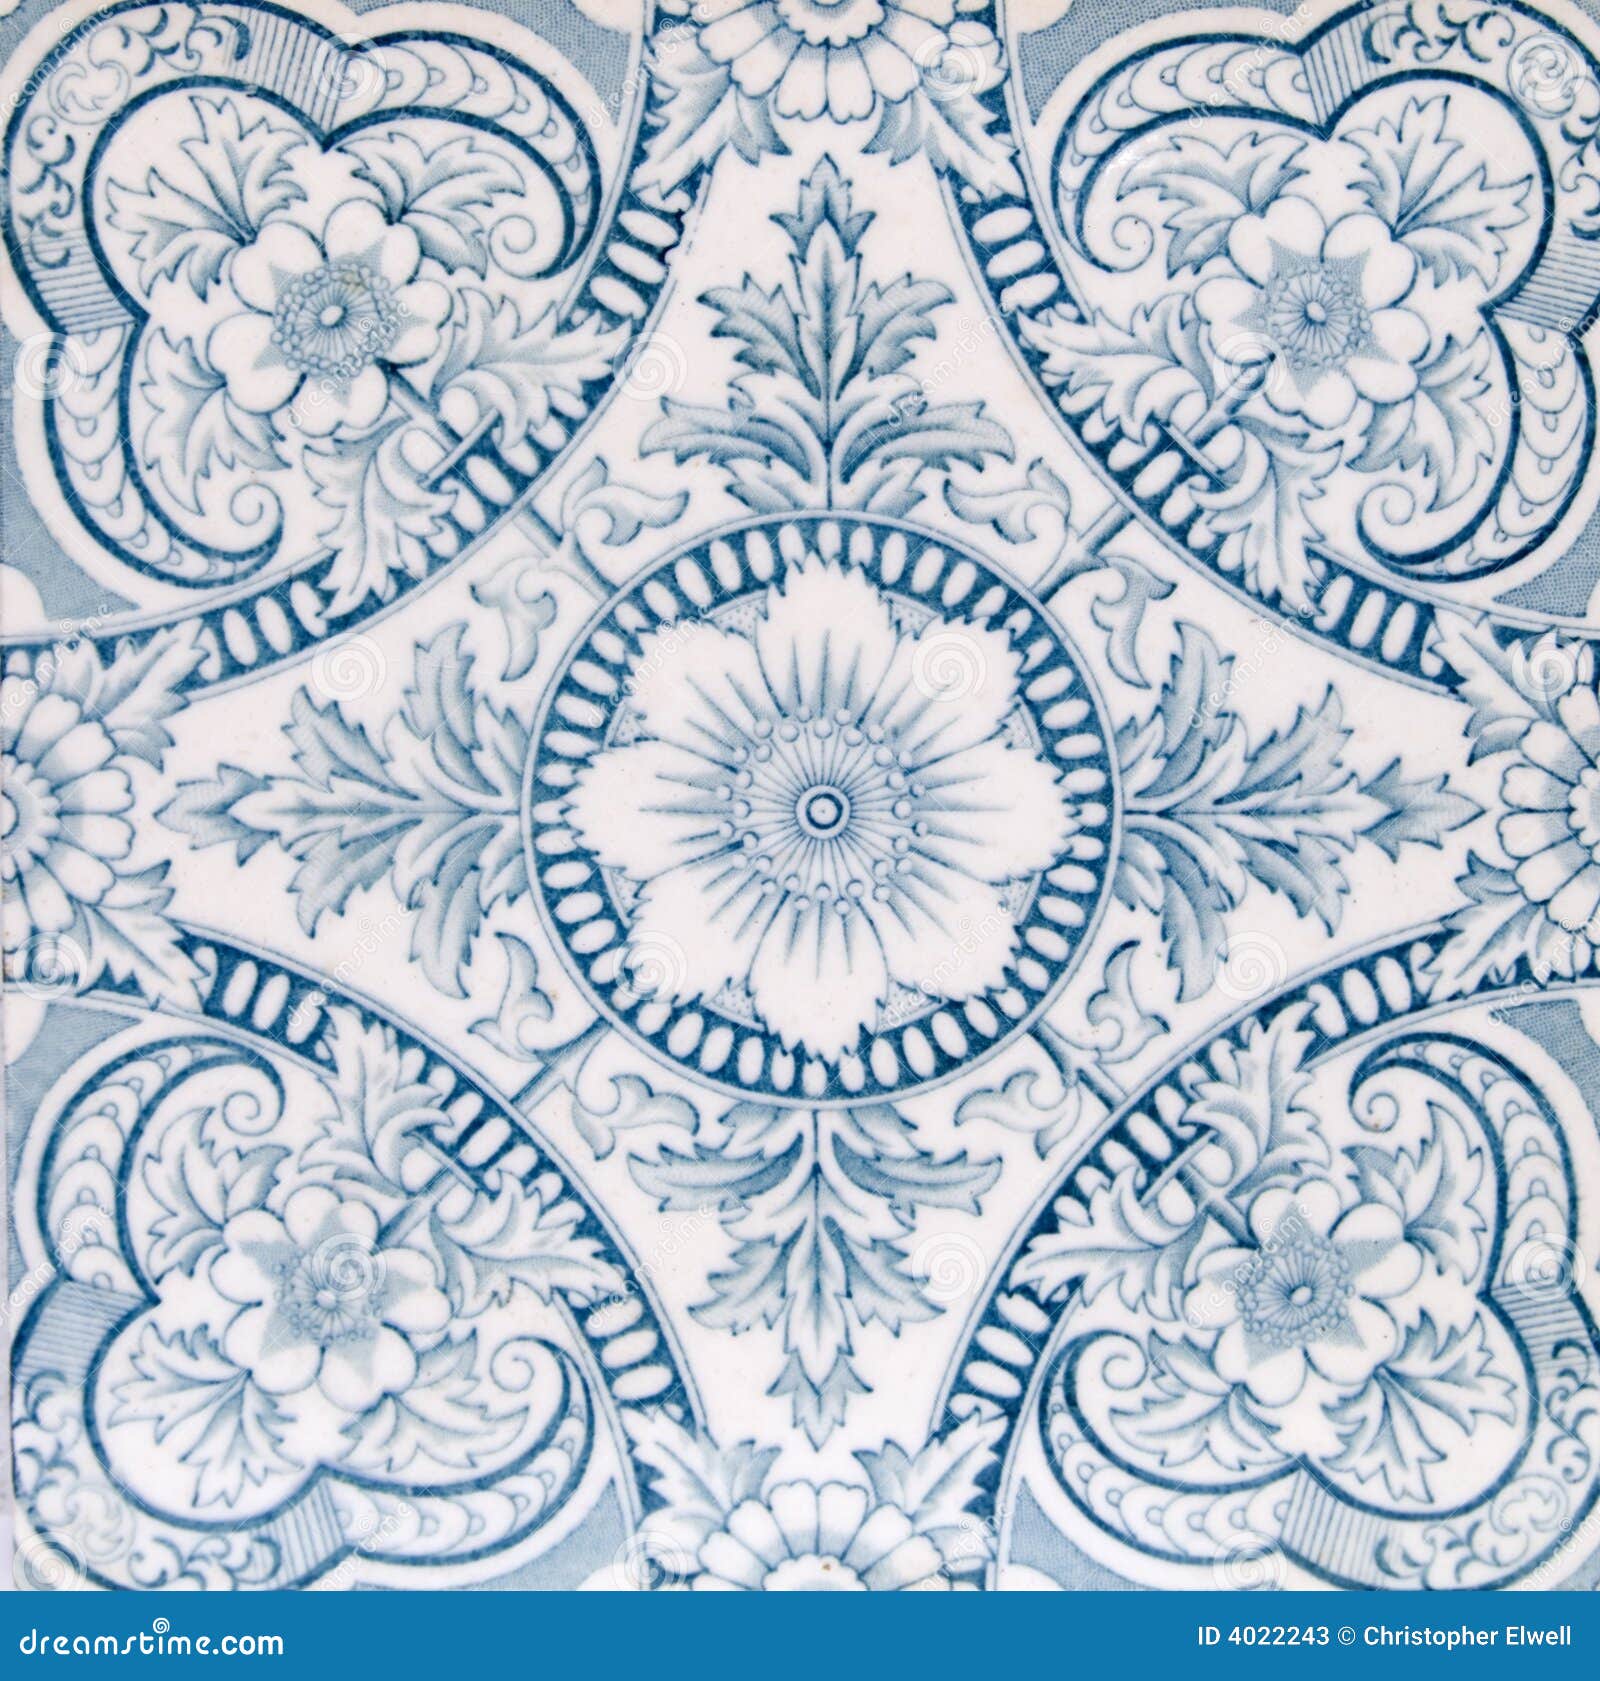 Antique Aesthetic Design Tile Stock Image - Image of decorative, blue ...